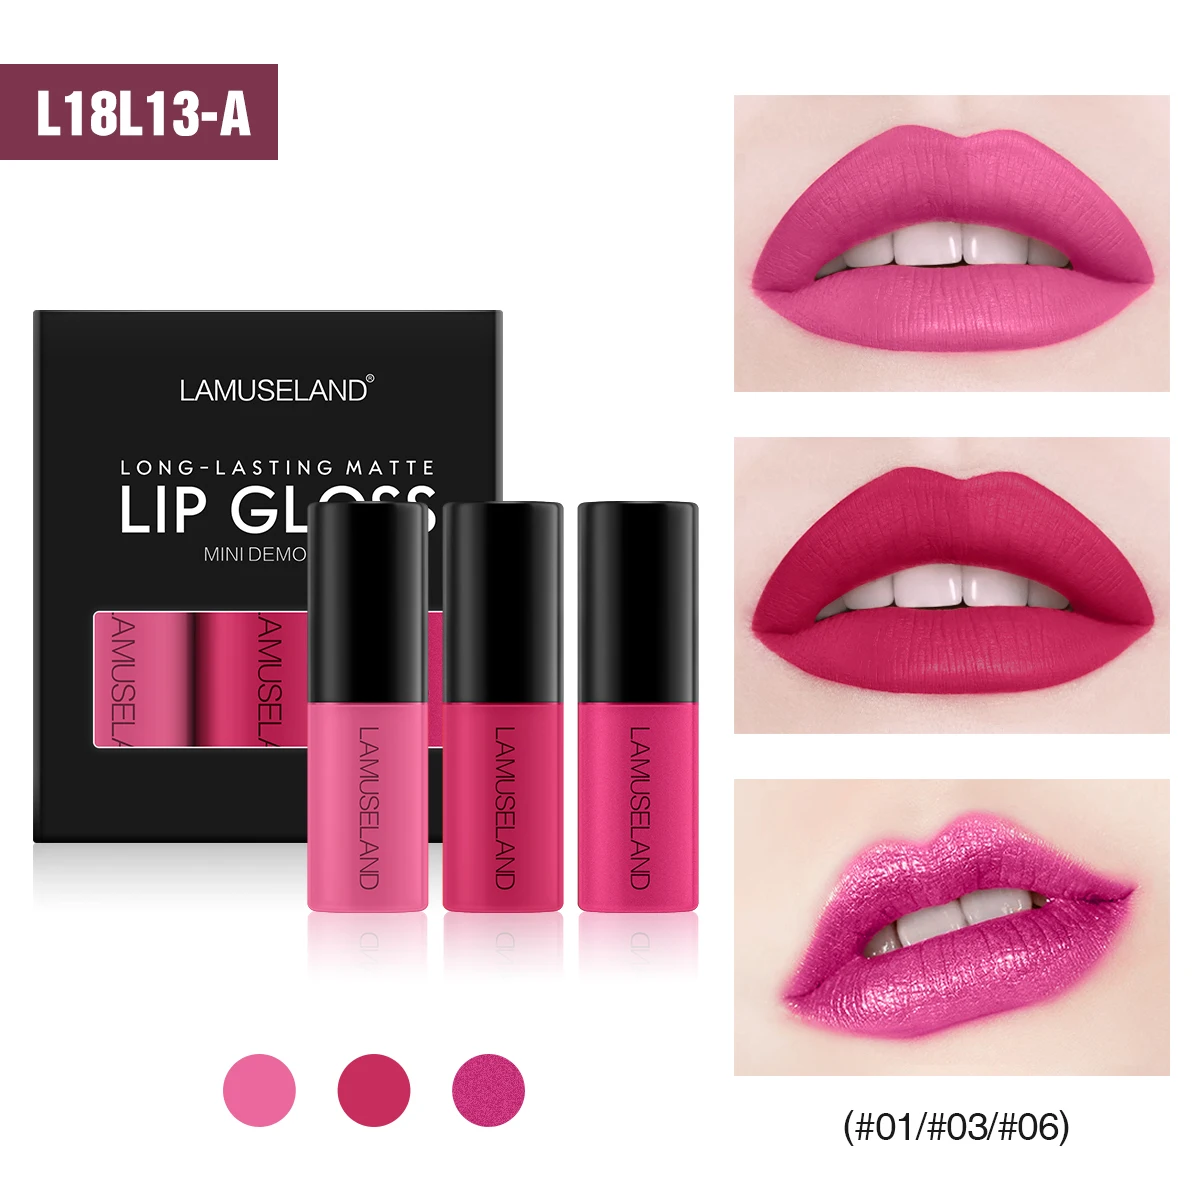 3Pcs/Lot Waterproof Long-Lasting Matte Mini Lipstick 12 Colors Lip Gloss 3.5g Lips Makeup Brand LAMUSELAND#L18L13 - Цвет: A